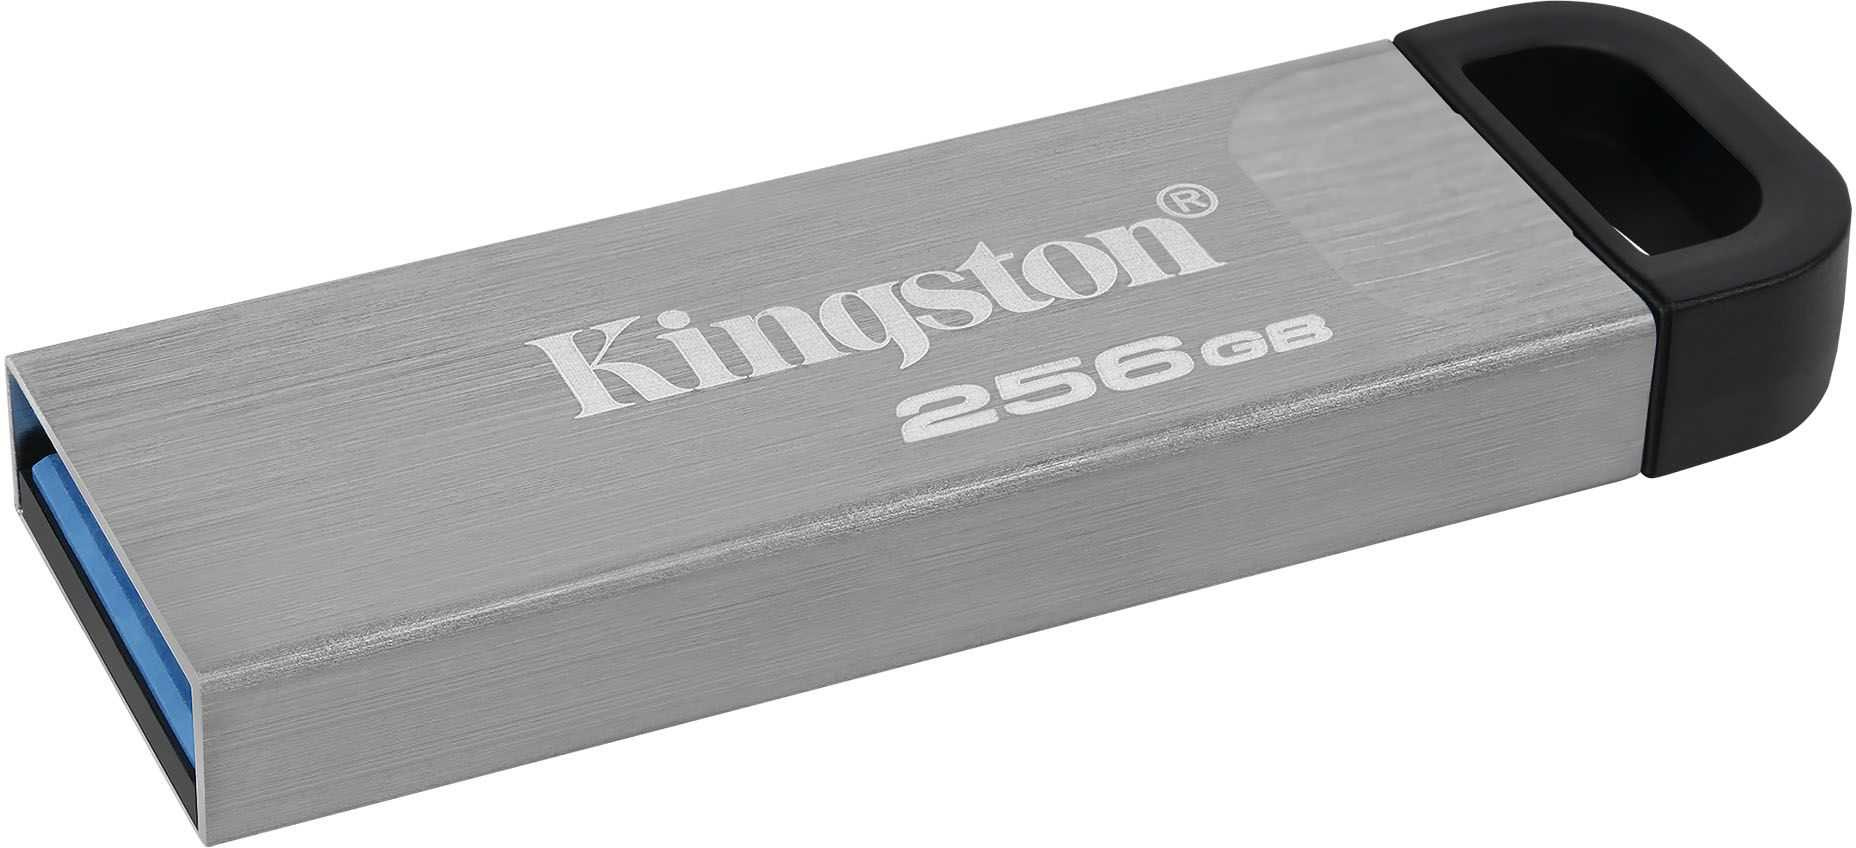 USB флешка Kingston DataTraveler Kyson 256Gb (DTKN/256GB)